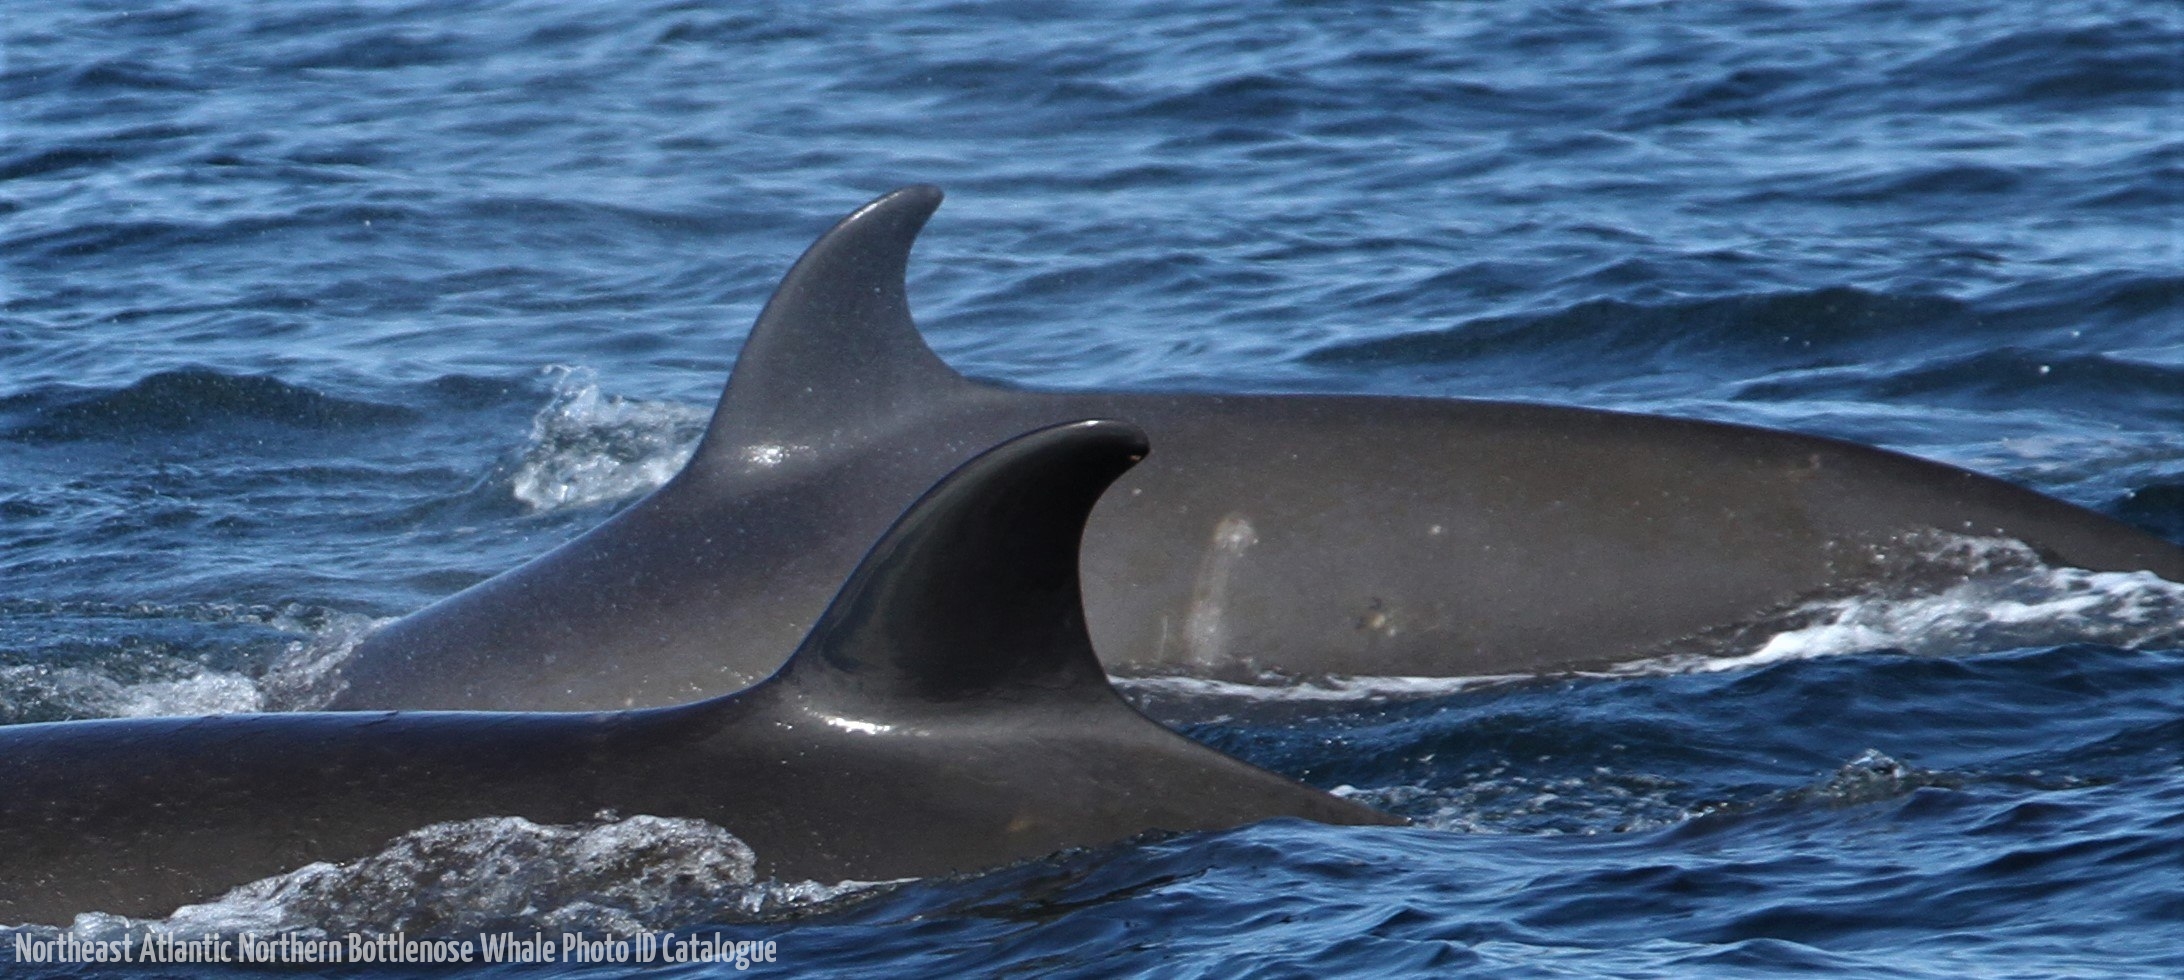 Whale ID: 0005,  Date taken: 24-06-2013,  Photographer: Paul H. Ensor